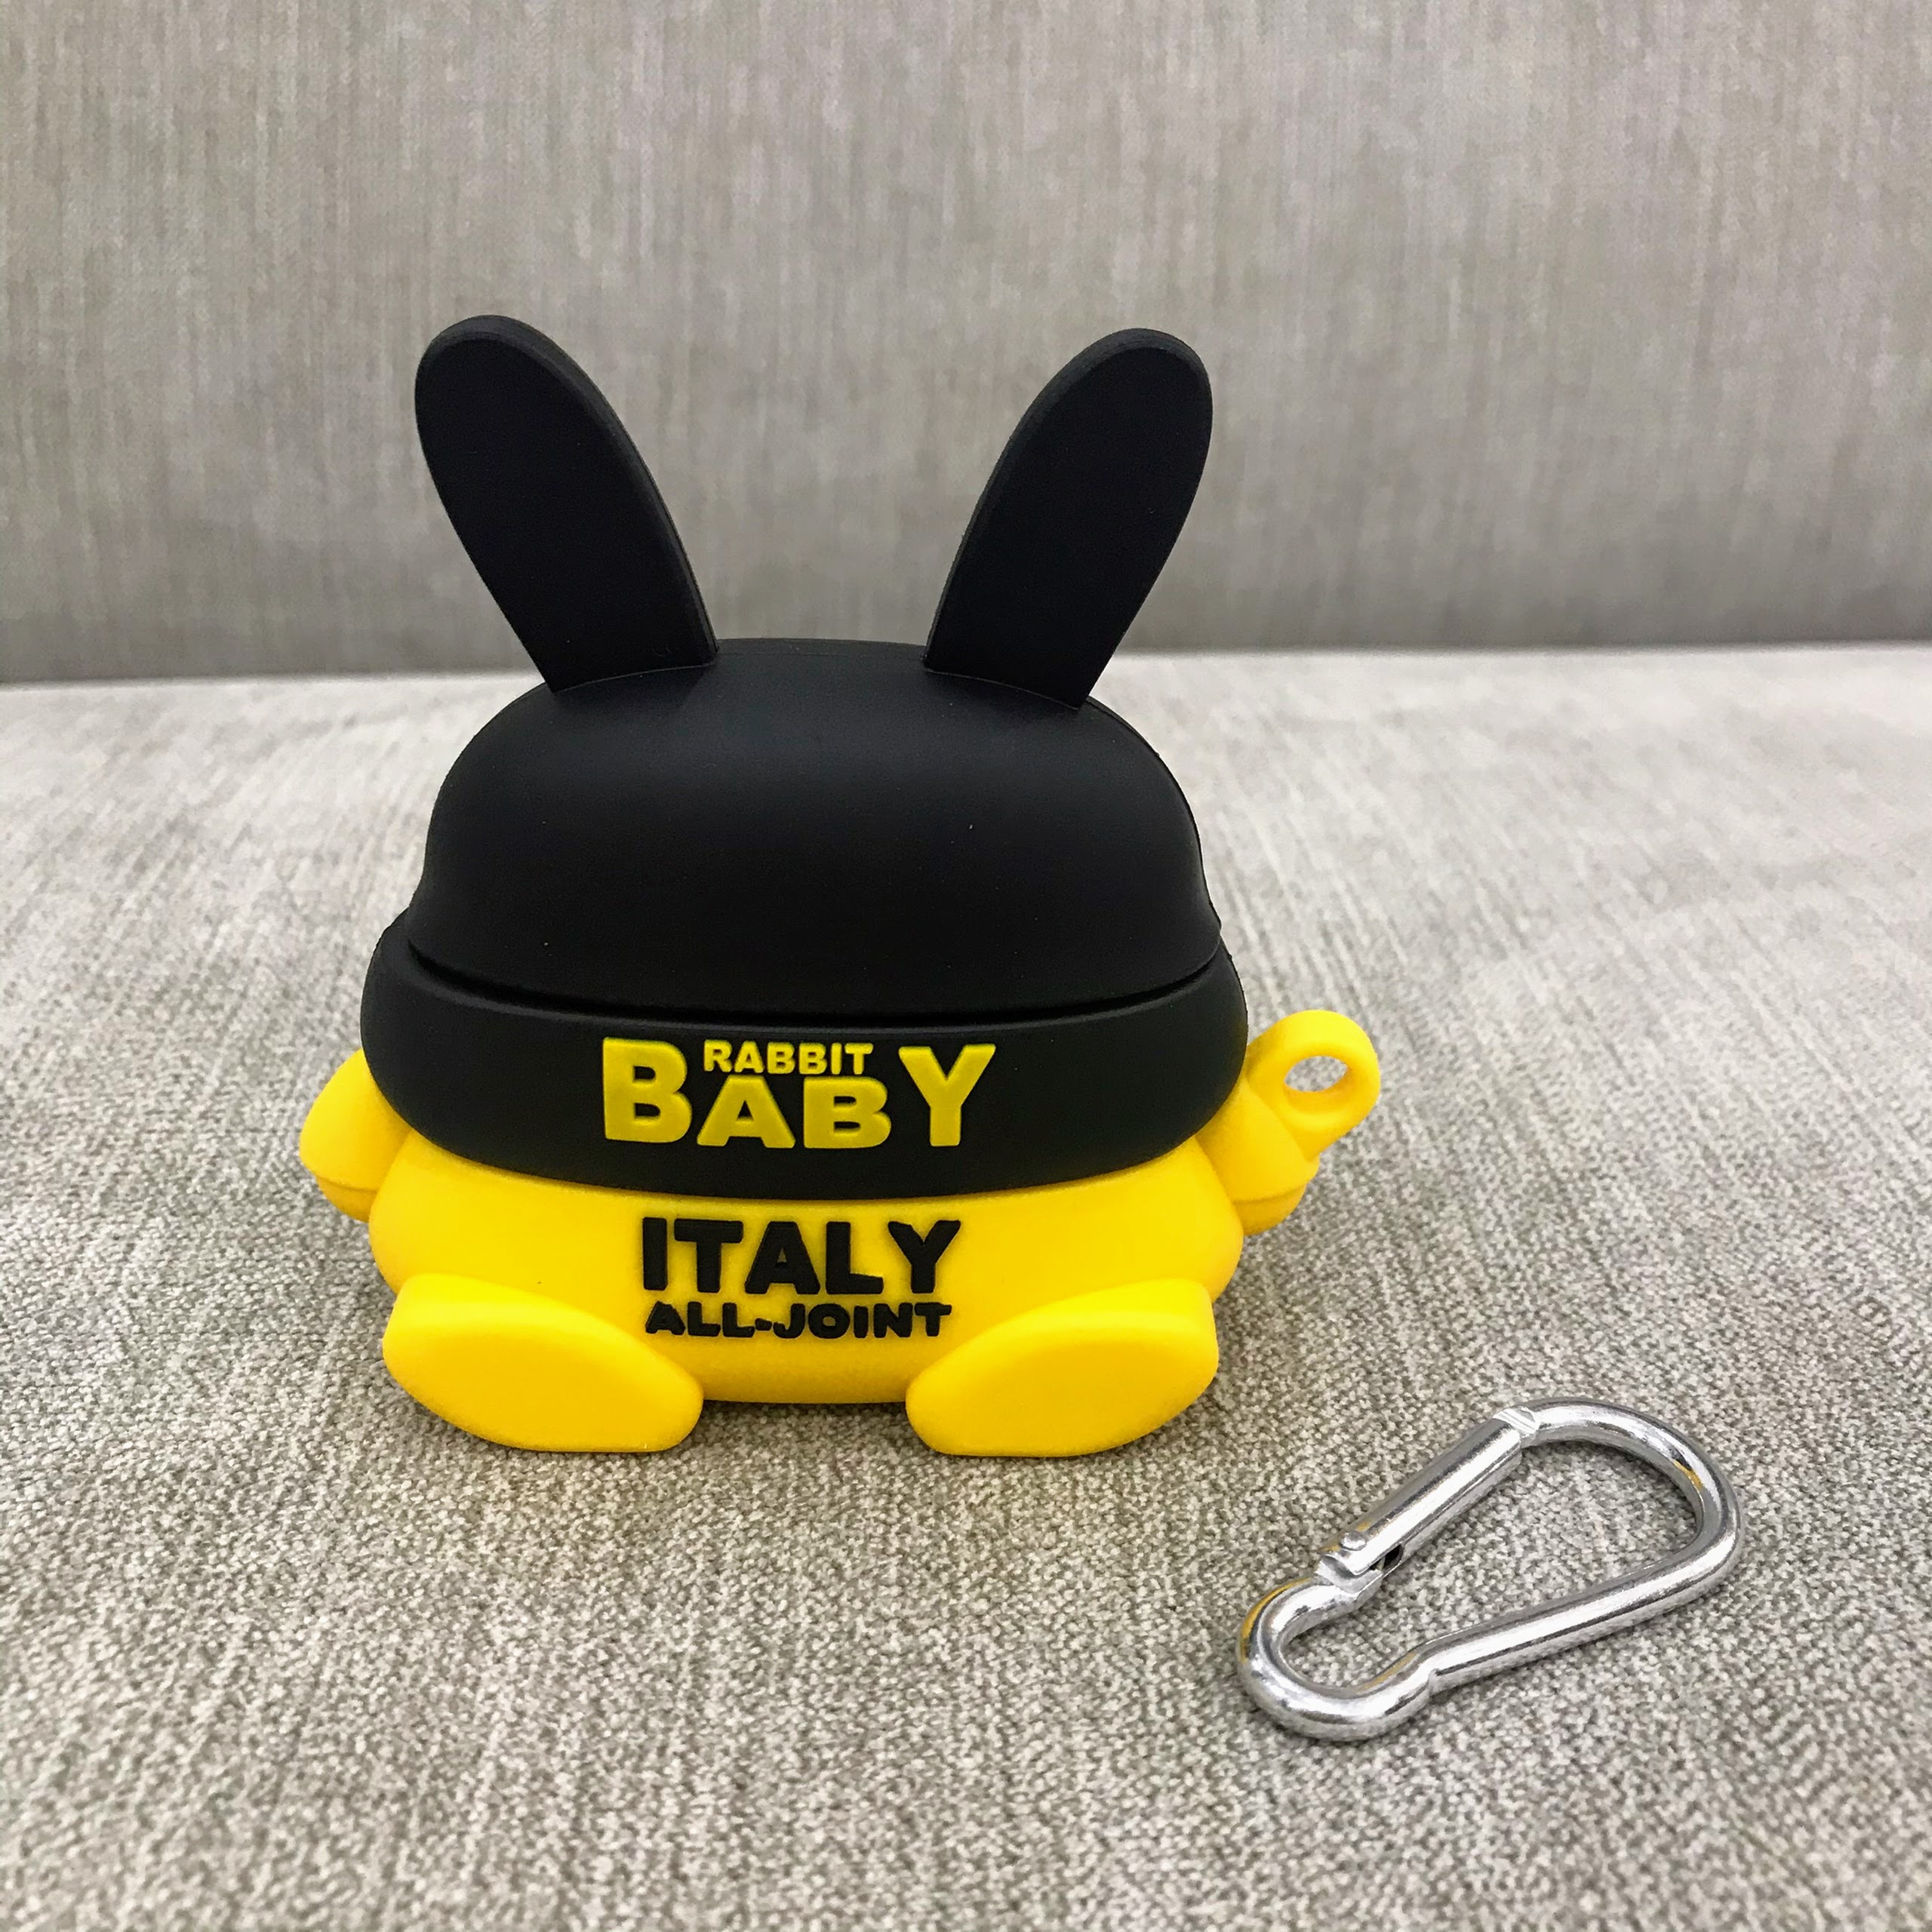 Case Airpods Pro Cao Cấp - Ốp Bảo Vệ Dành Cho Airpods Pro - Baby Italia